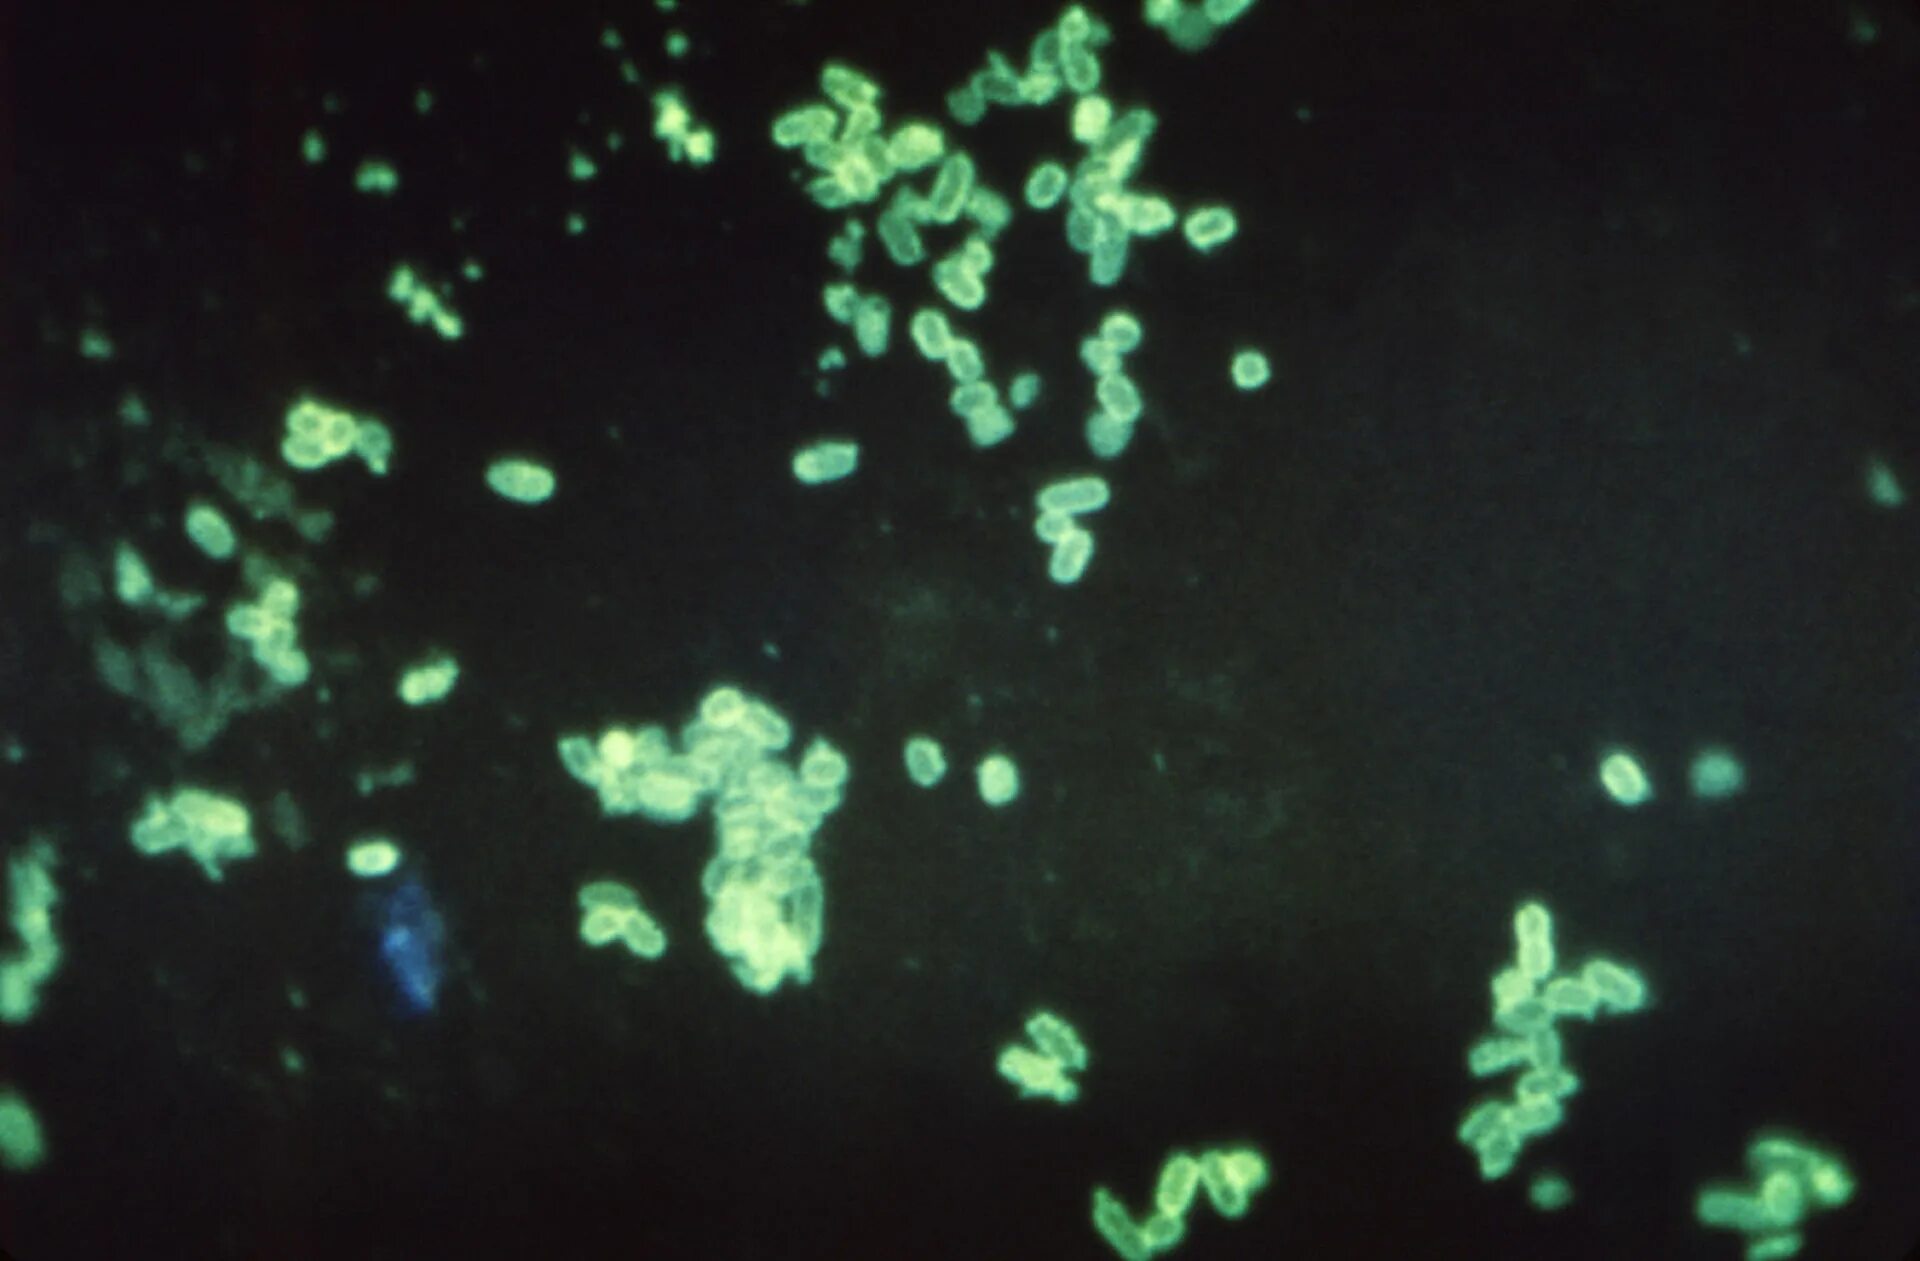 Coli sotwe. Fluorescent antibody Stain. Самое бактериальное семейство. Семья микробов. Family of bacteria.